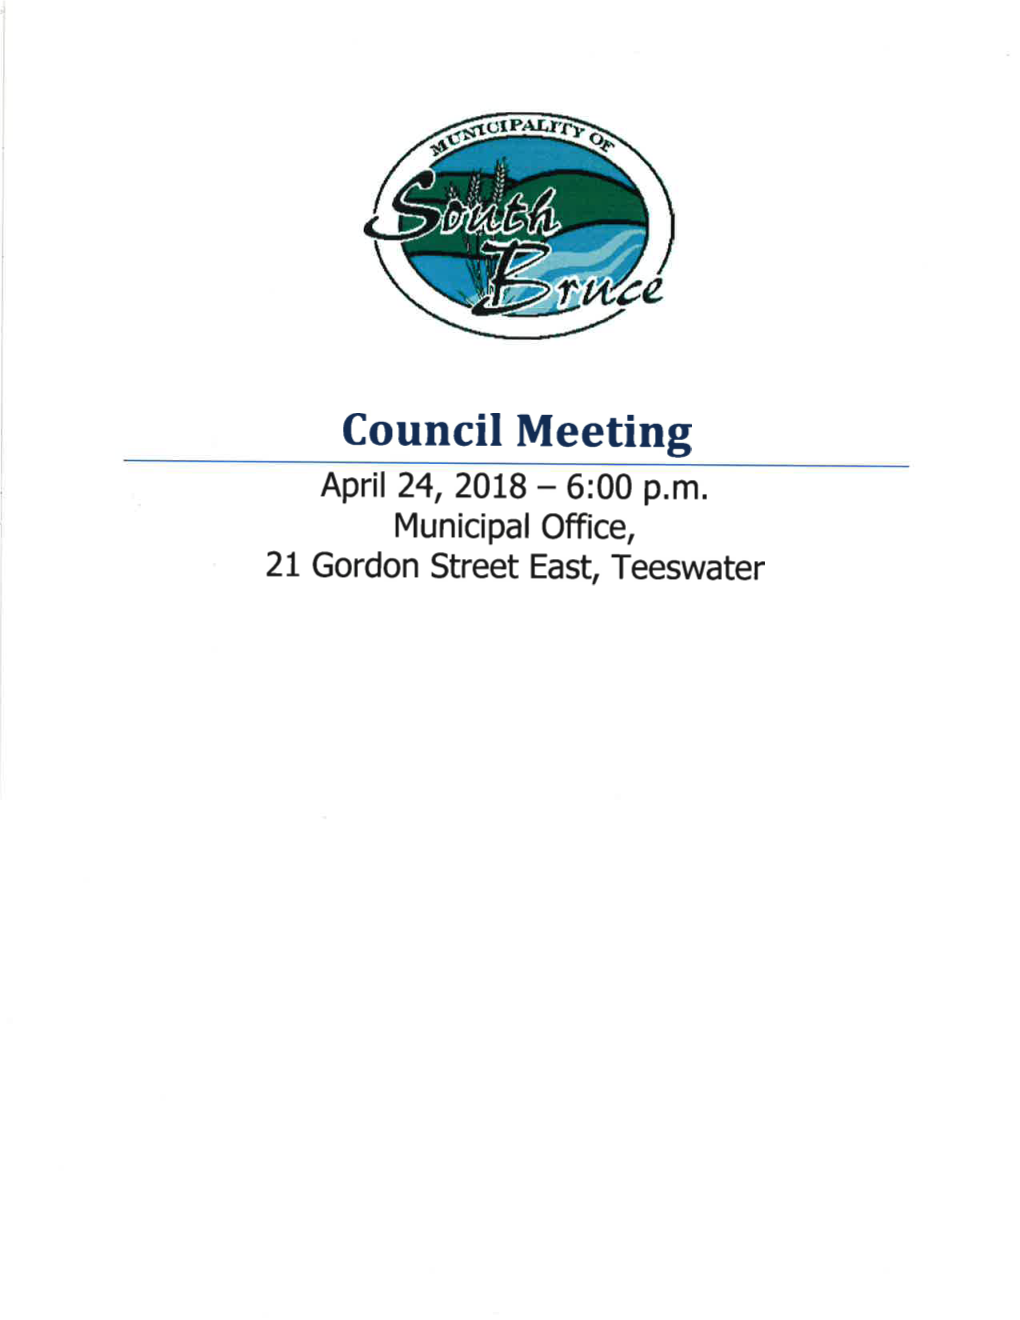 Council Meeting April 24,2018 - 6:00 P.M